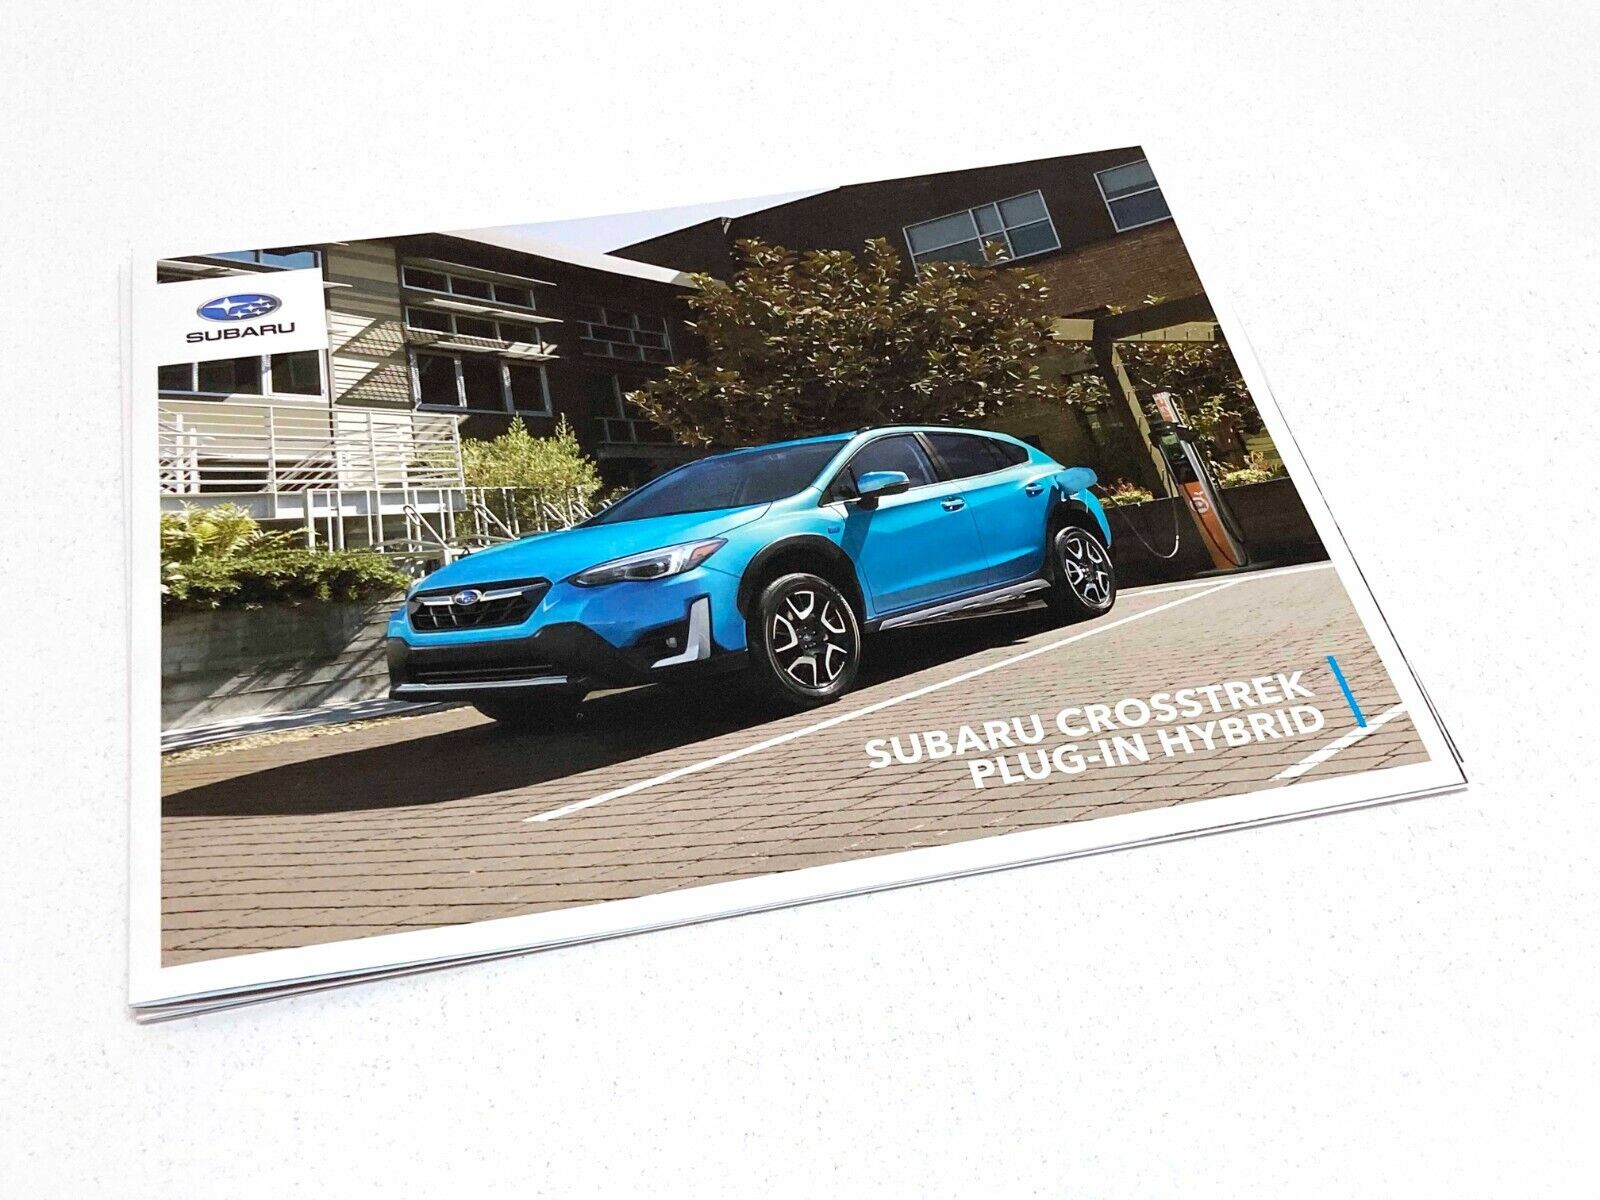 2021 Subaru Crosstrek Plug-In Hybrid Brochure | eBay